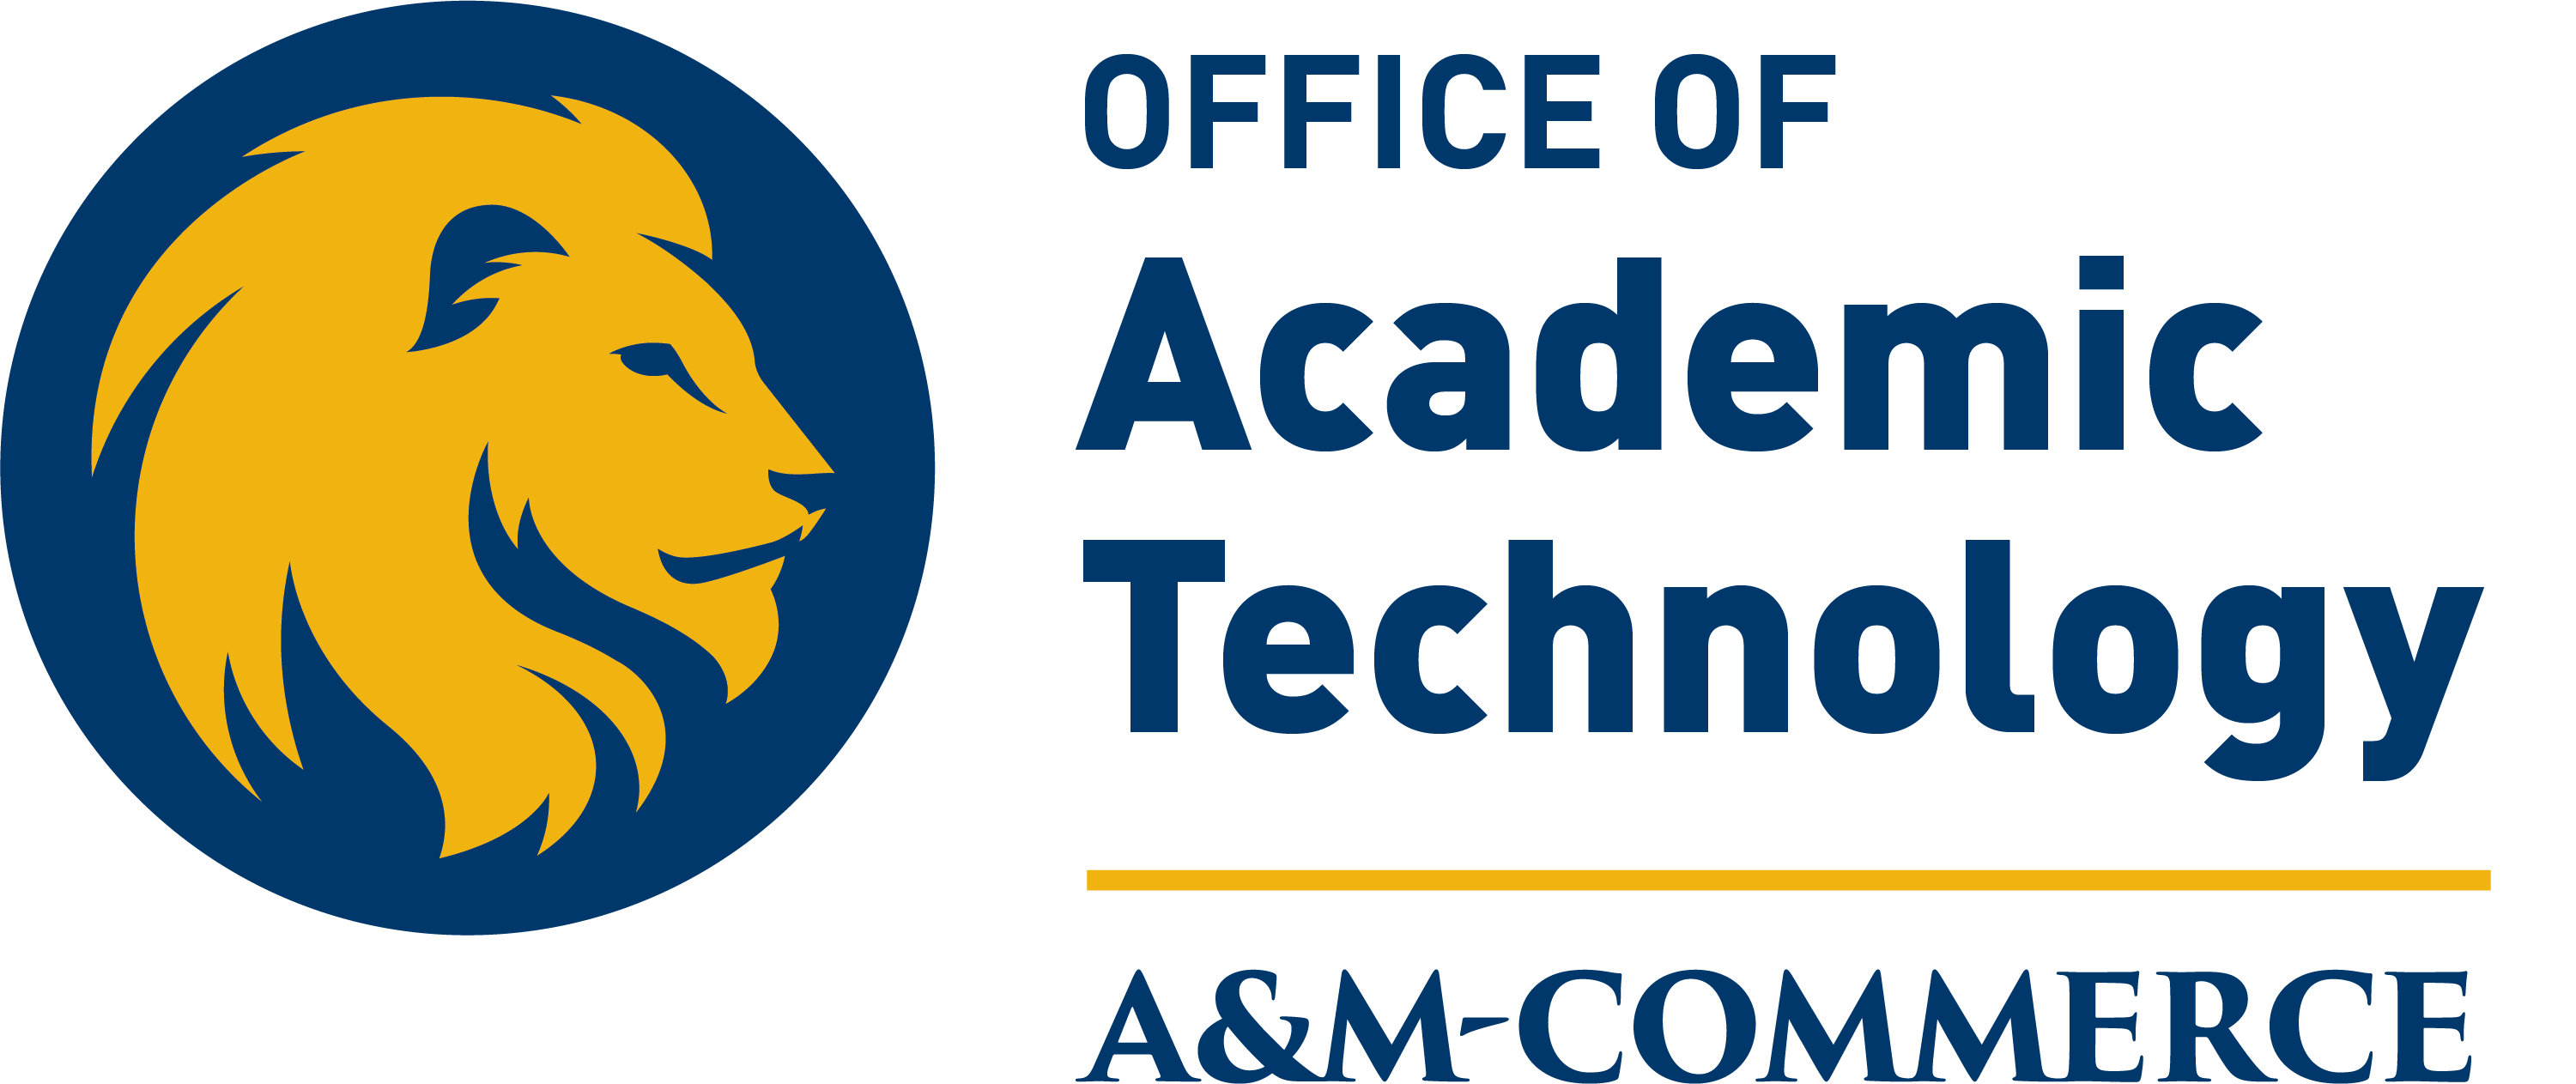 Educational Technology - Texas A&M University-Commerce3001 x 1263